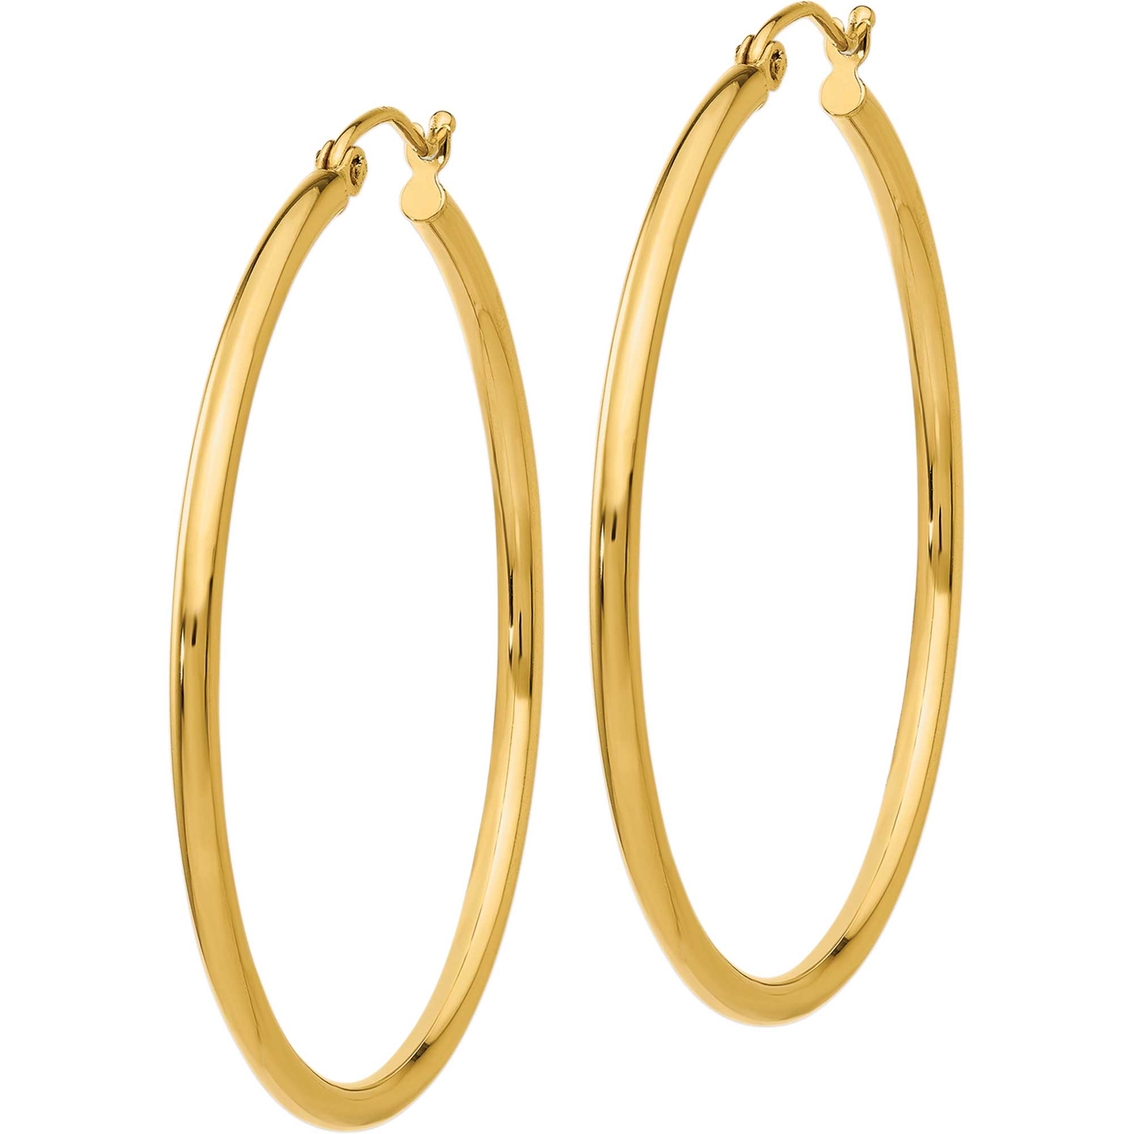 14K Yellow Gold Hoop Earrings - Image 2 of 3